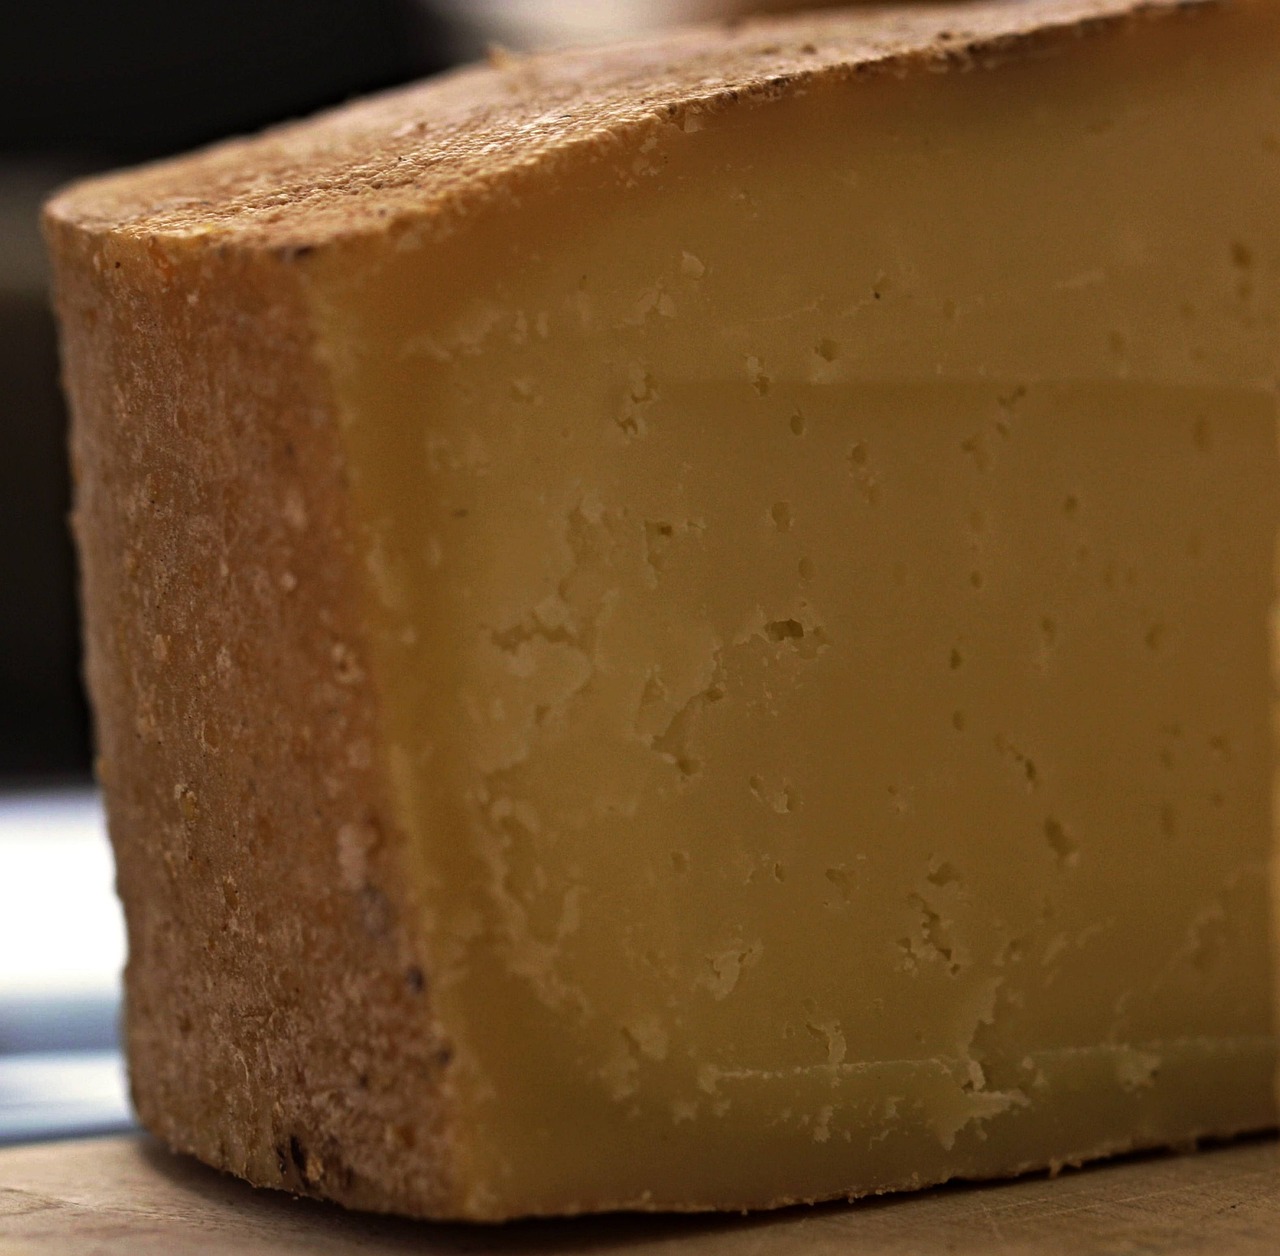 anana disfruta del famoso queso idiazabal de sus rebanos 5